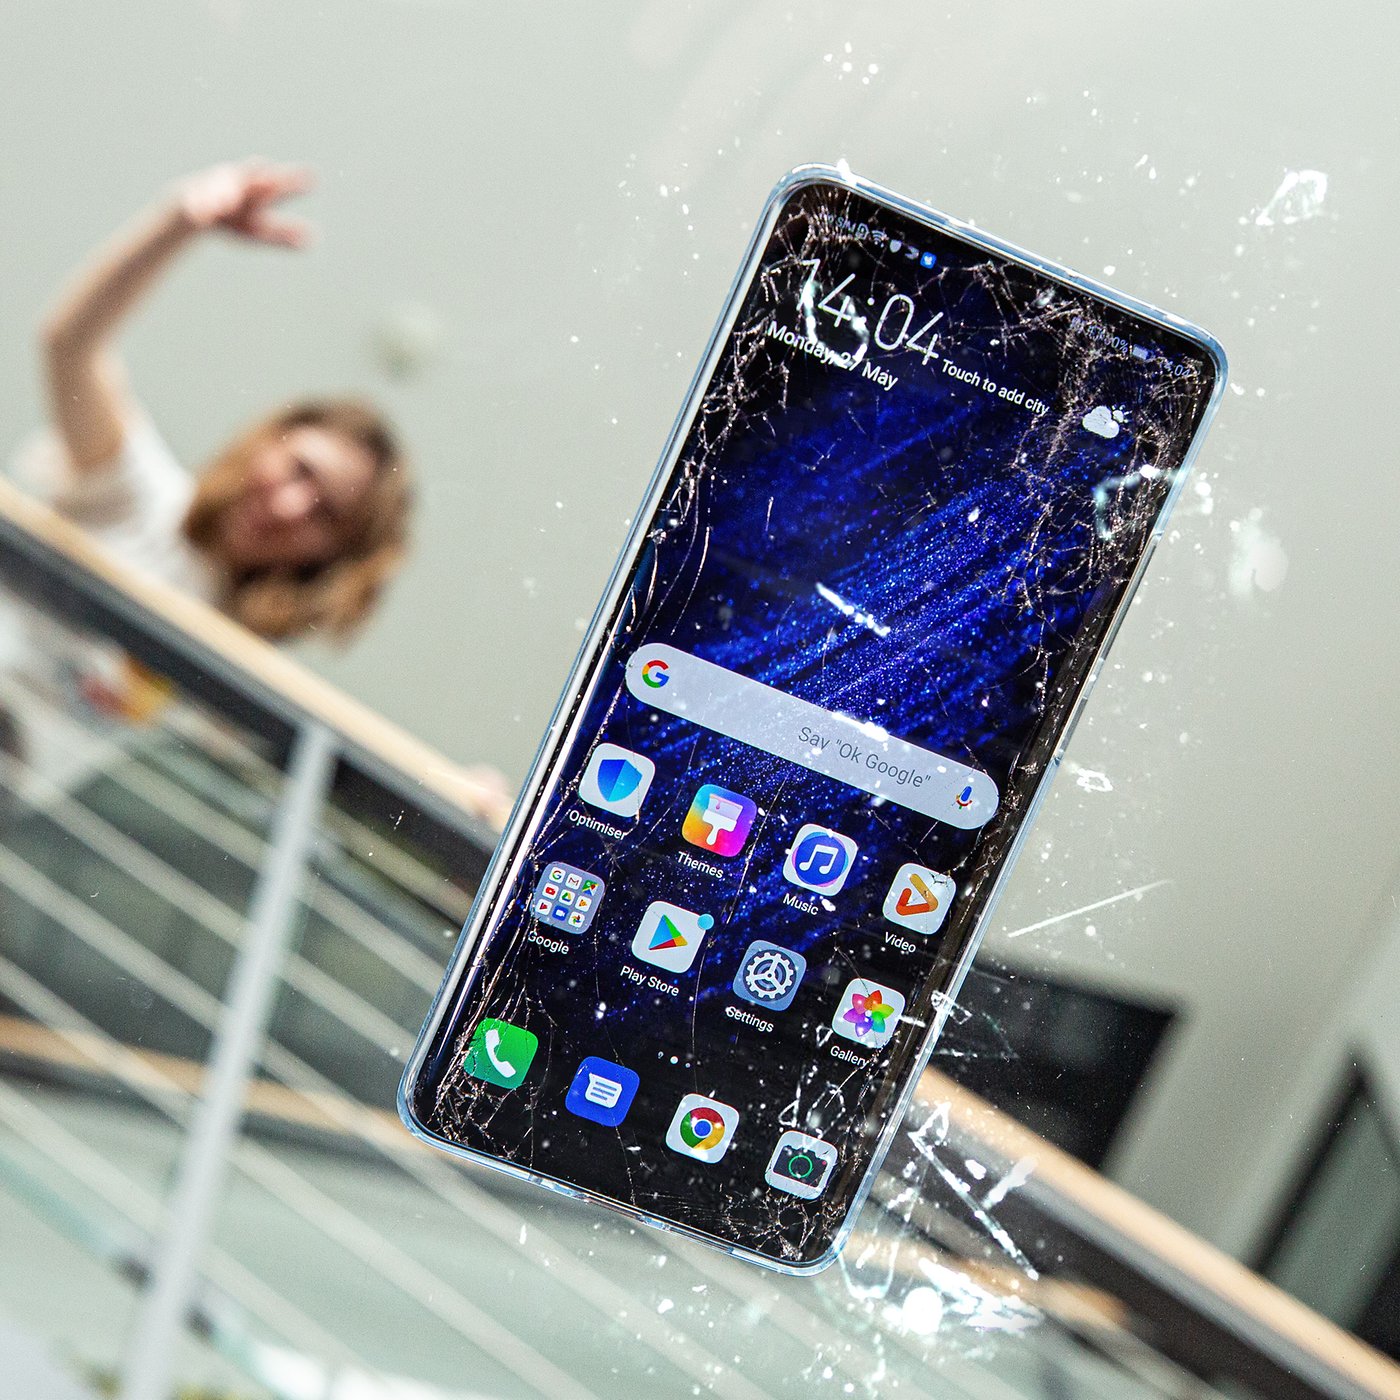 unlock android phone with broken screen